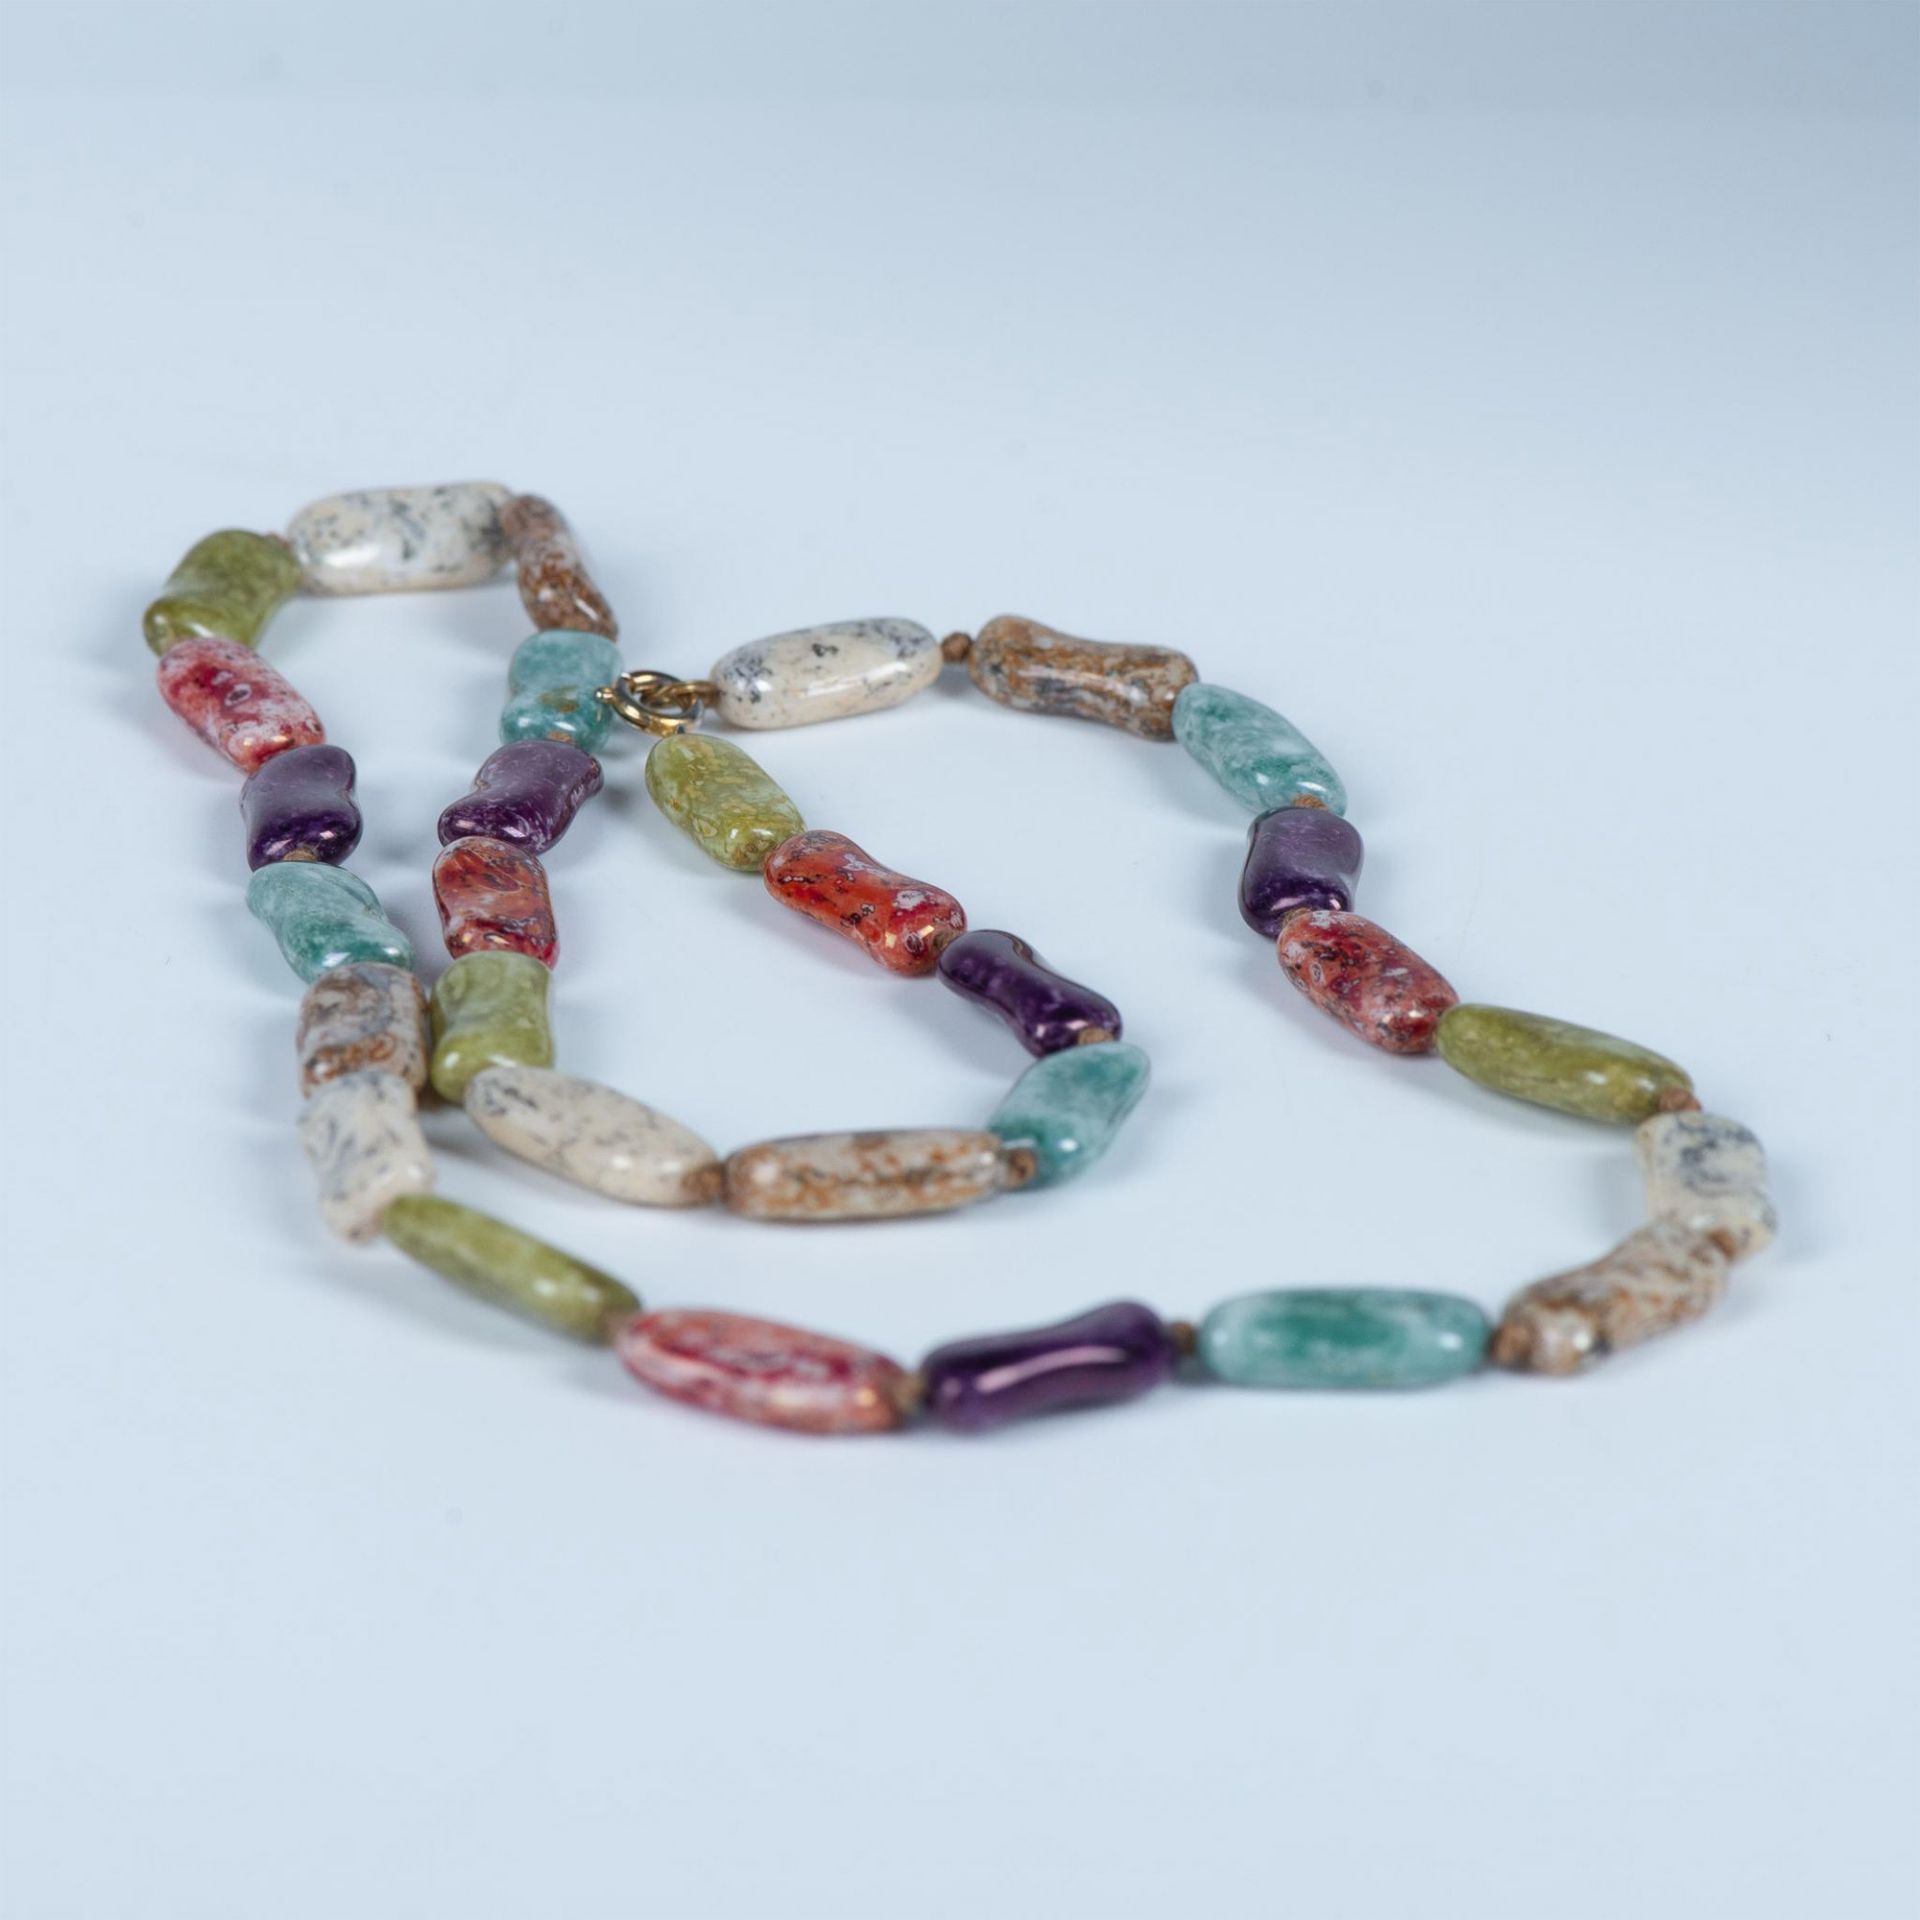 Colorful Multi-Gemstone Bead Necklace - Image 4 of 5